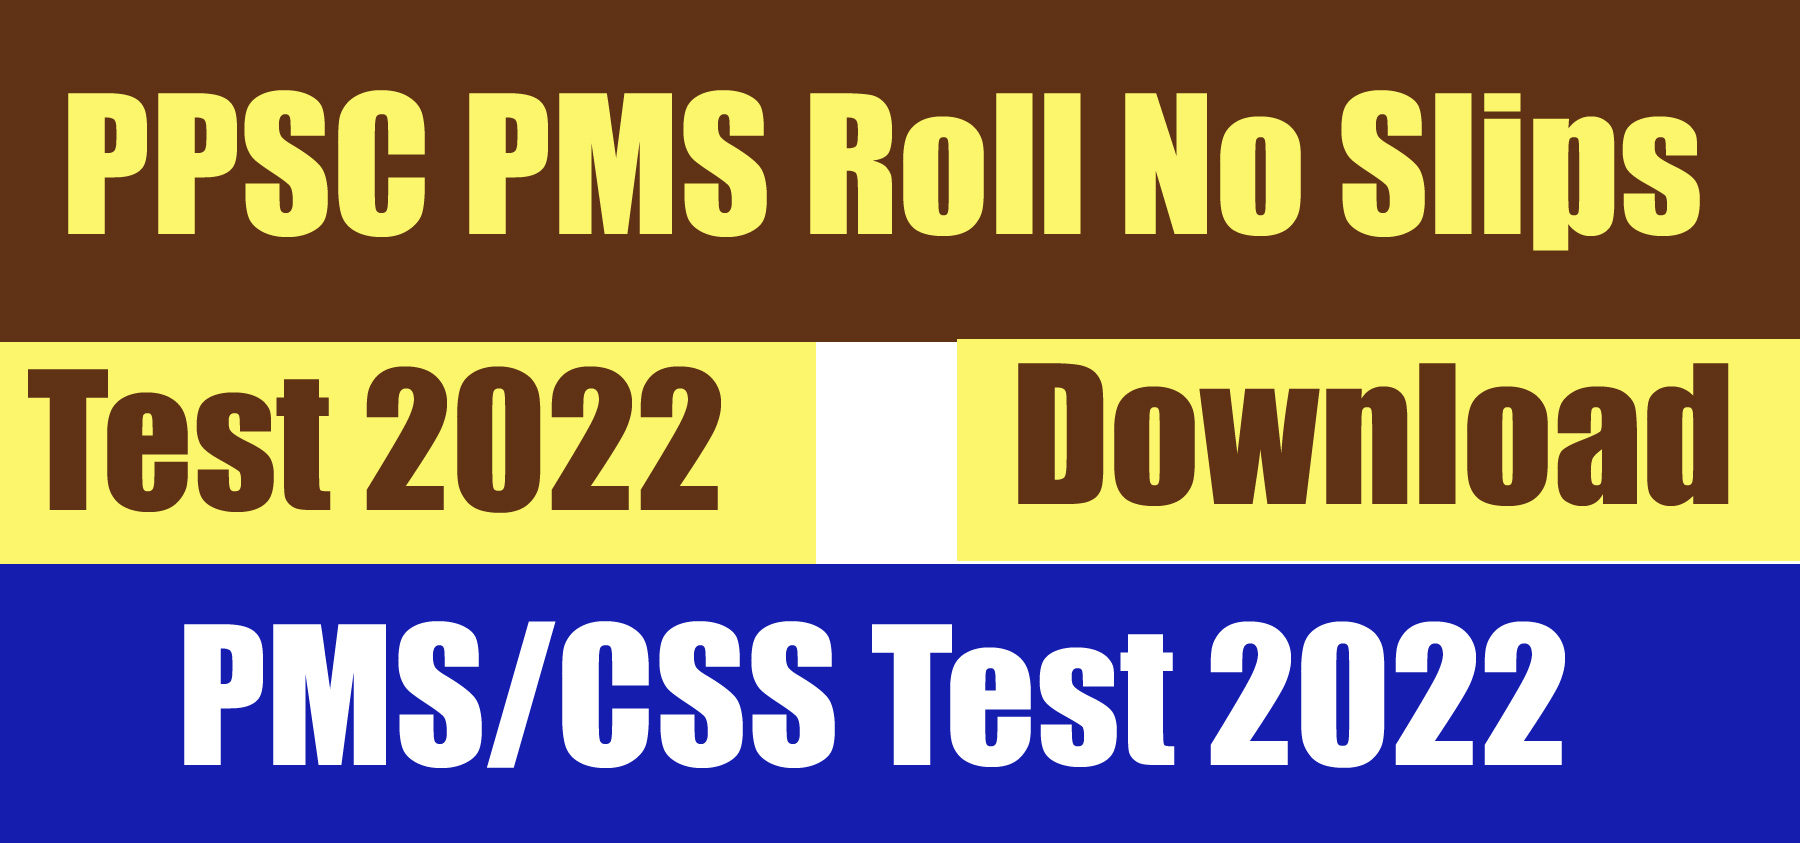 PPSC PMS roll no slips